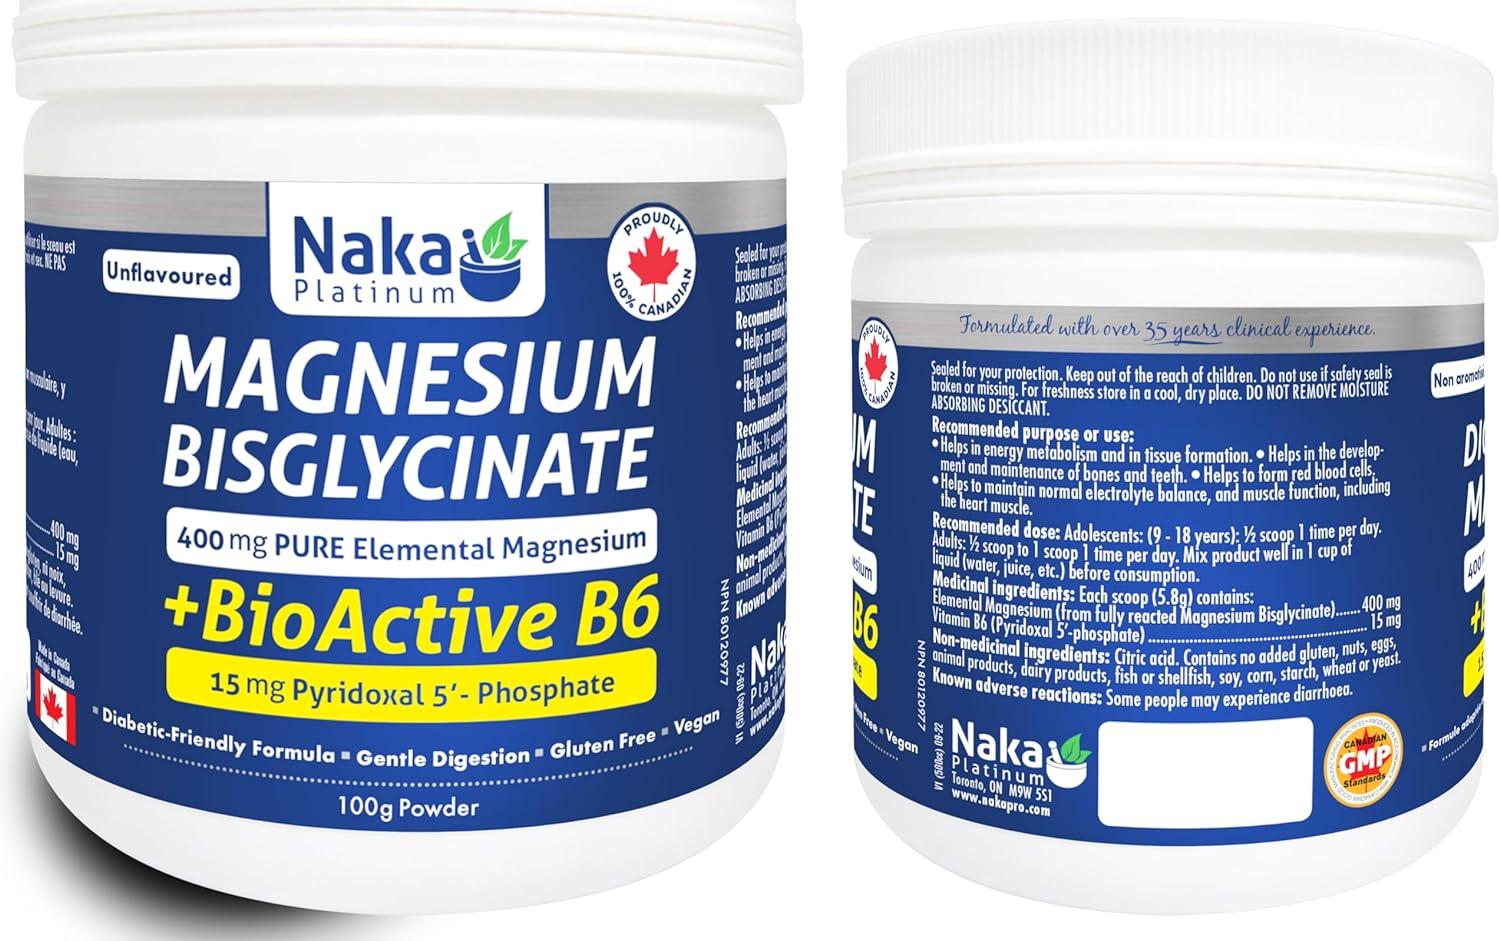 Naka Platinum Magnesium Bisglycinate + BioActive B6 (100mg)